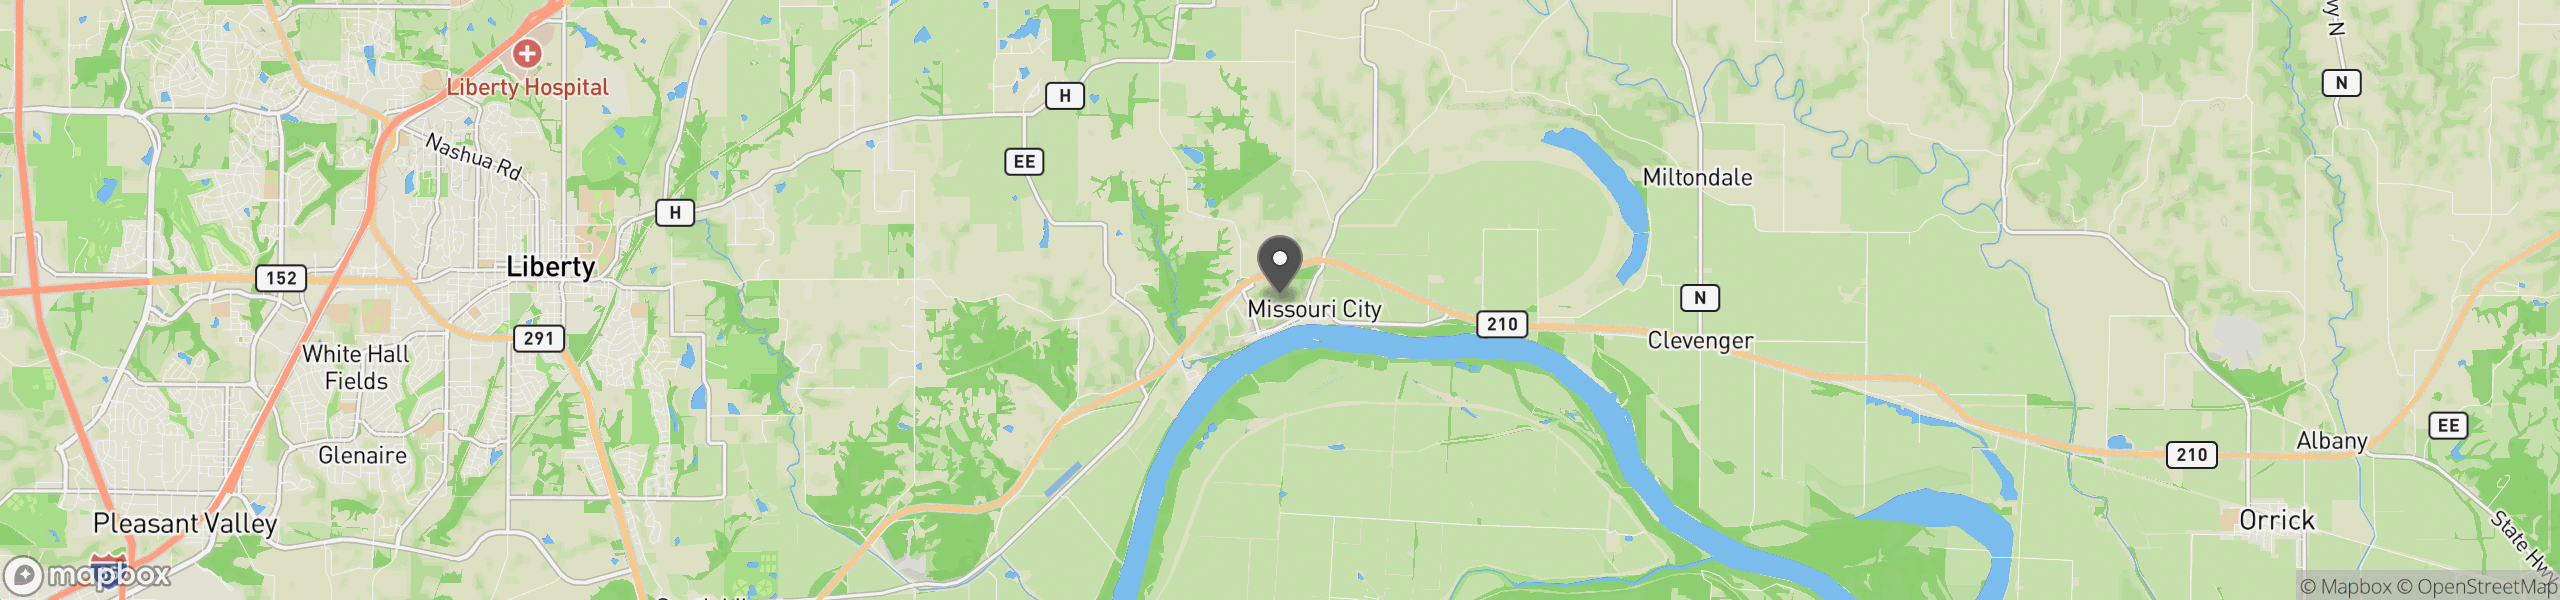 Missouri City, MO 64072